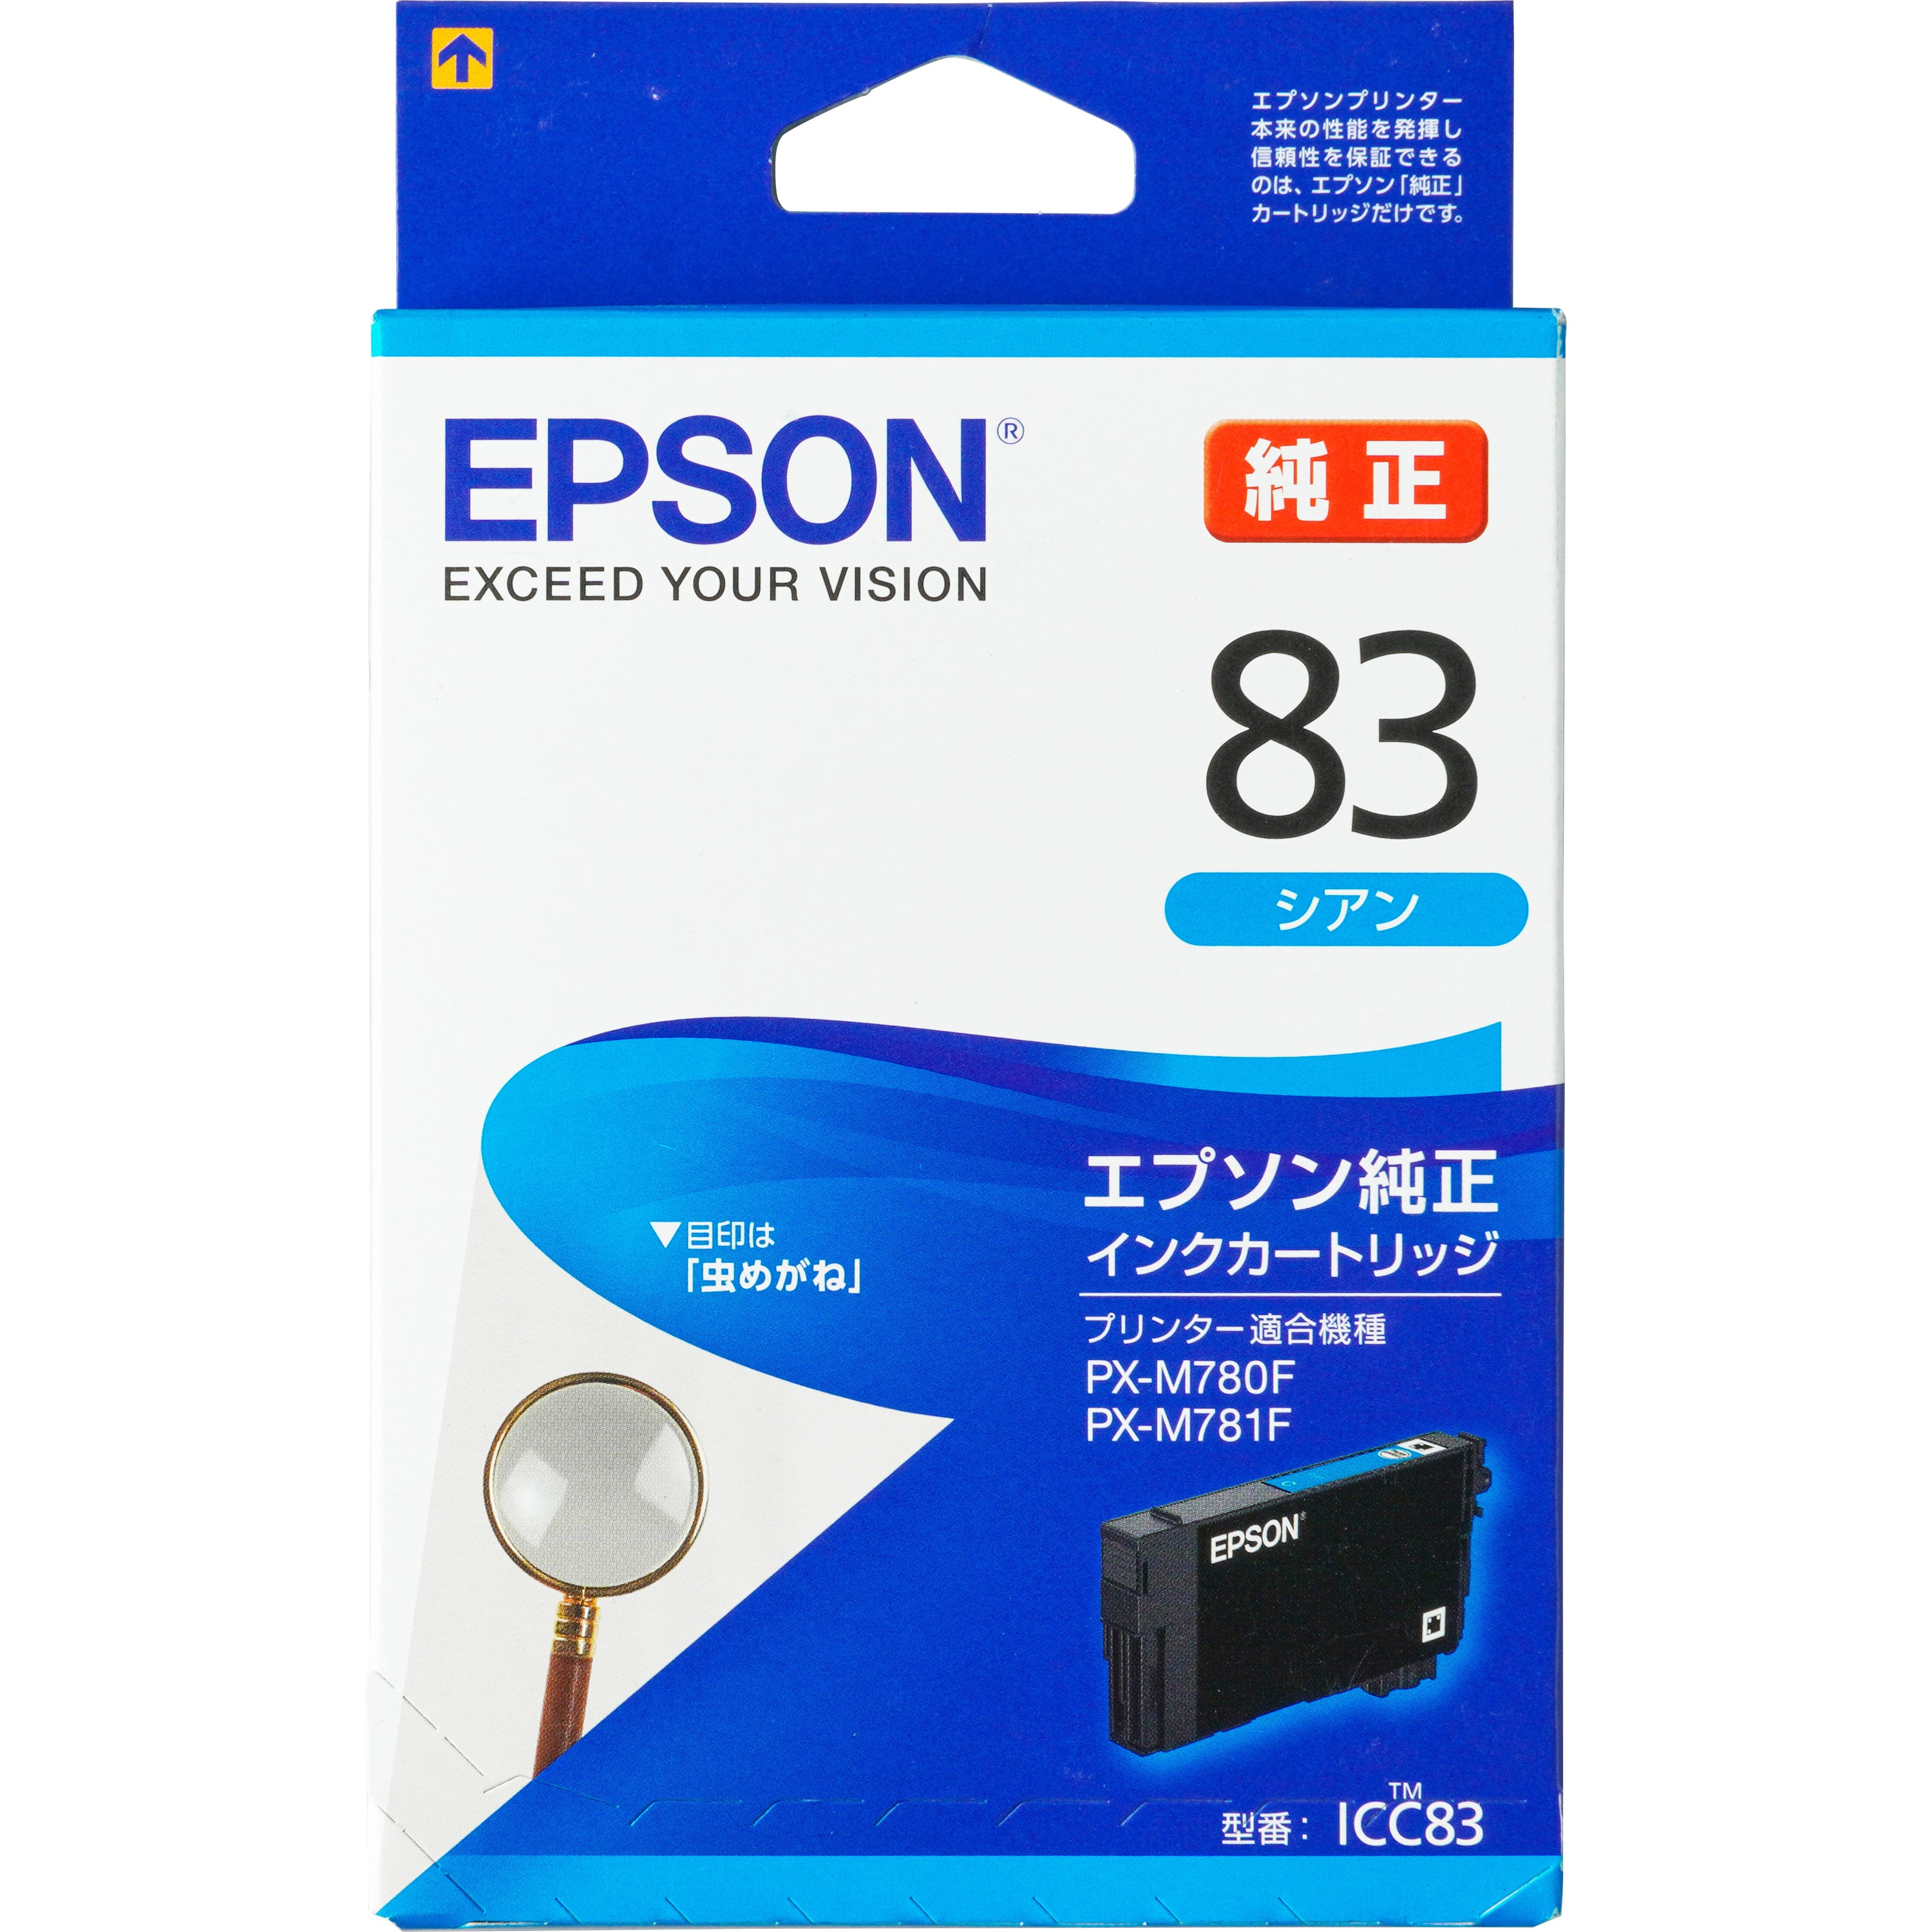 EPSON 純正インク IC4CL83 4色パック 2つセット - 絵本・児童書